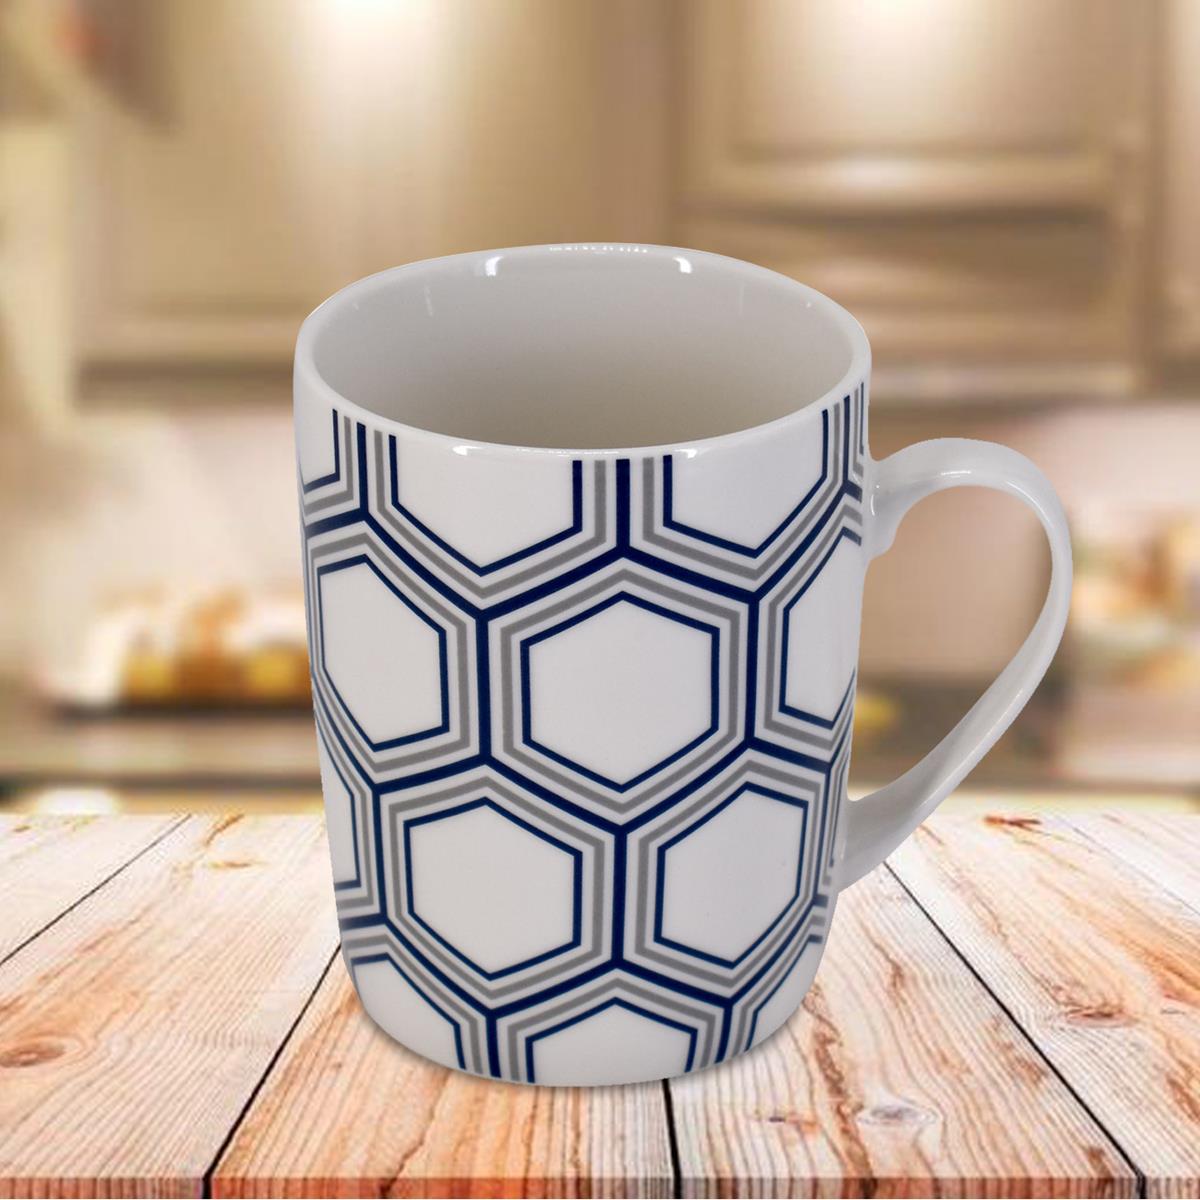 Printed Ceramic Tall Coffee or Tea Mug with handle - 325ml (BPM4574-B)